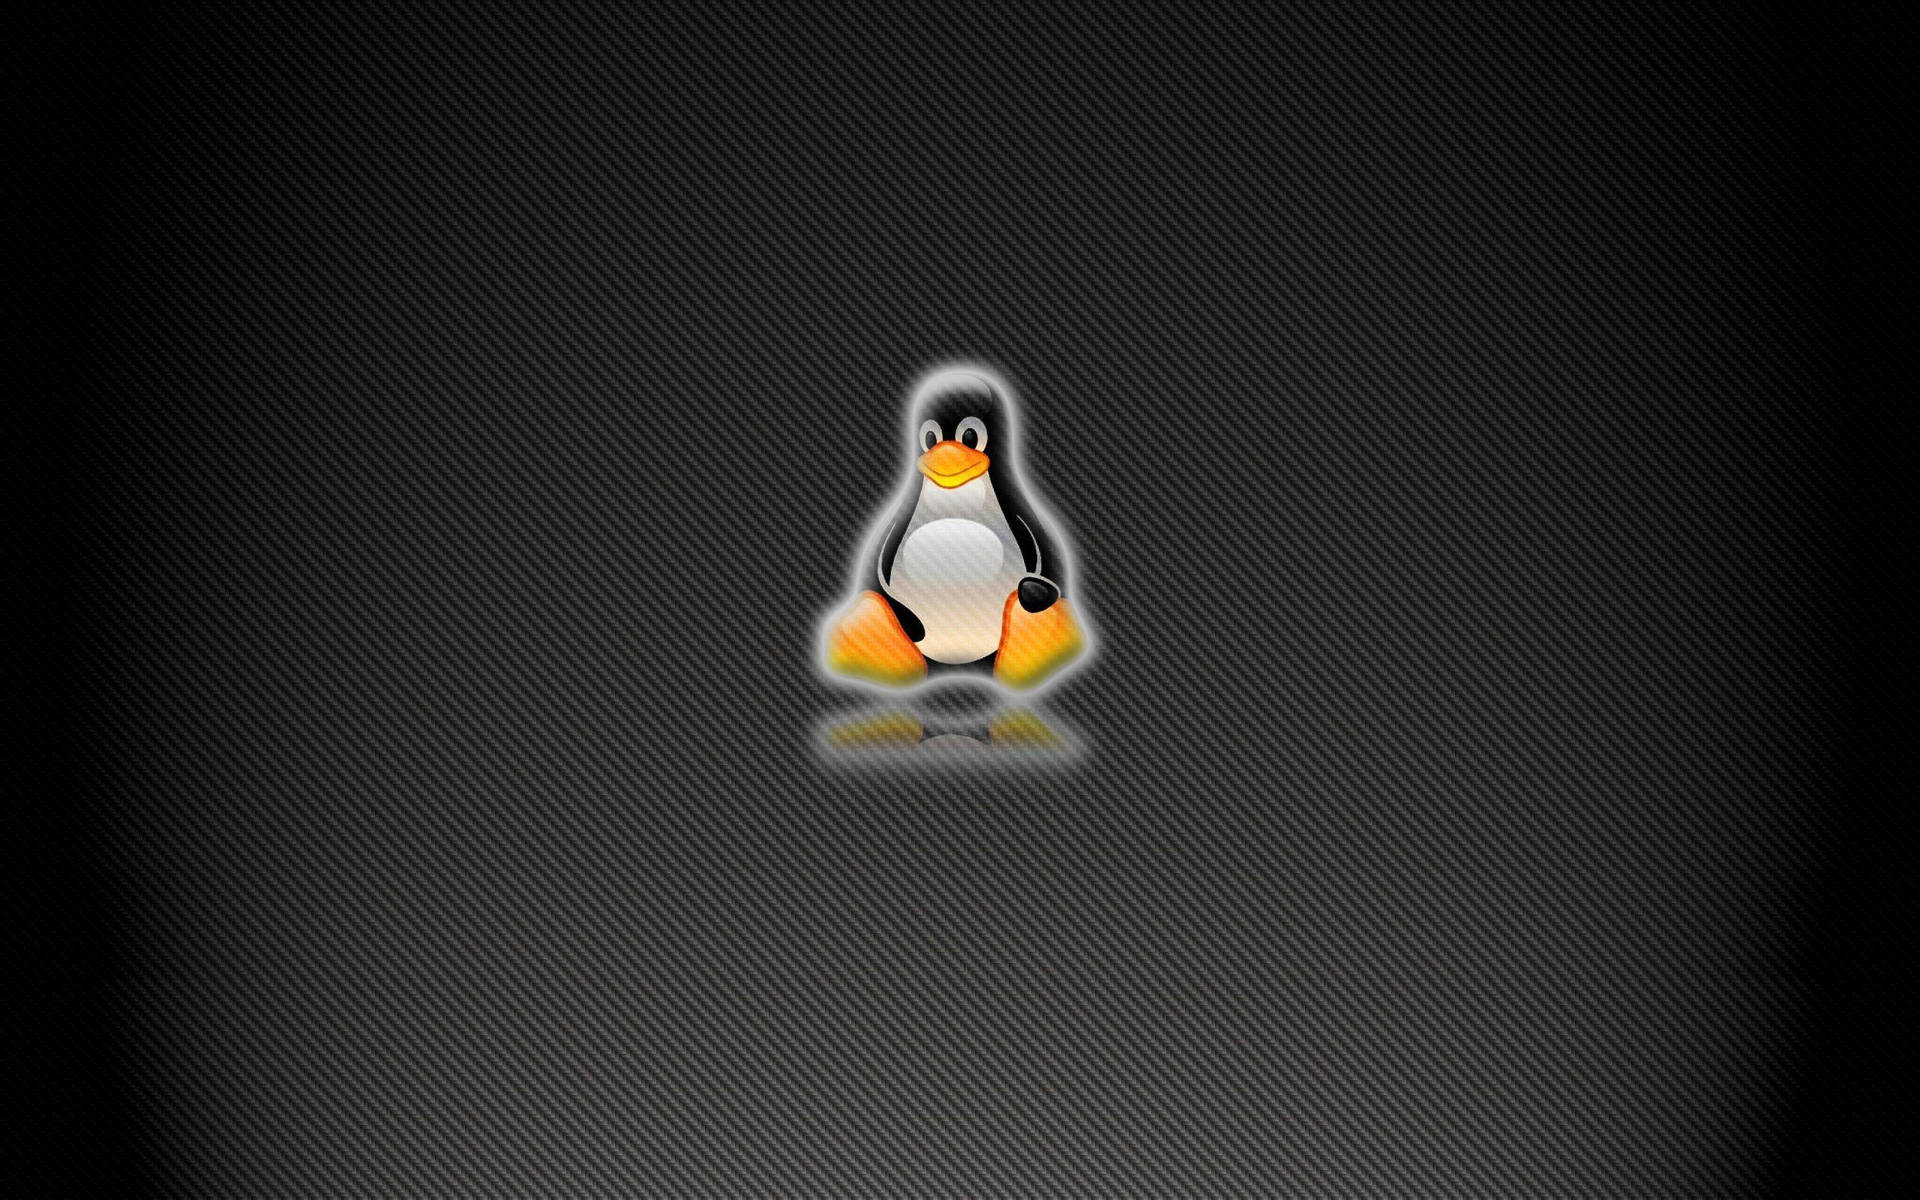 Charming Linux Desktop Official Mascot Tux Wallpaper